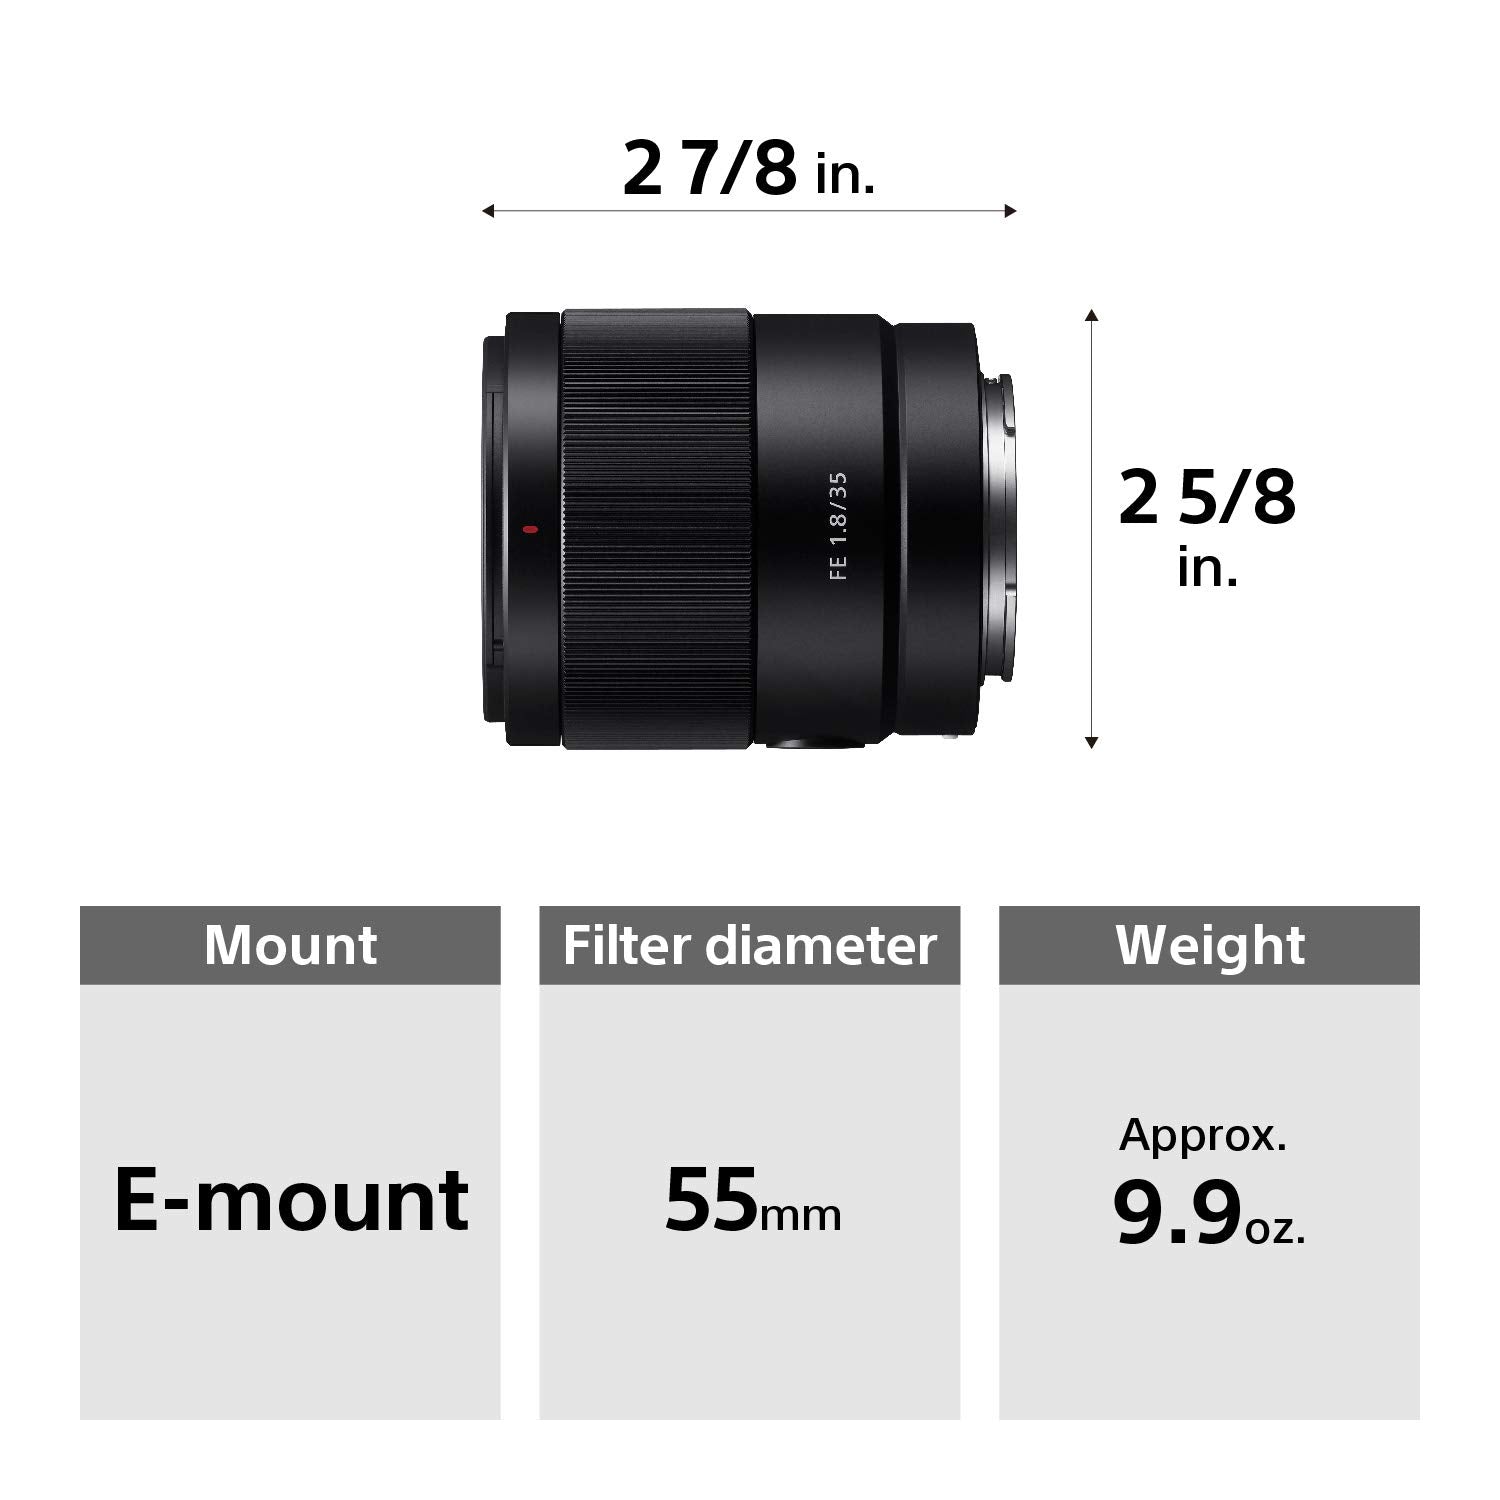 Sony FE 35mm F1.8 Wide Angle Lens